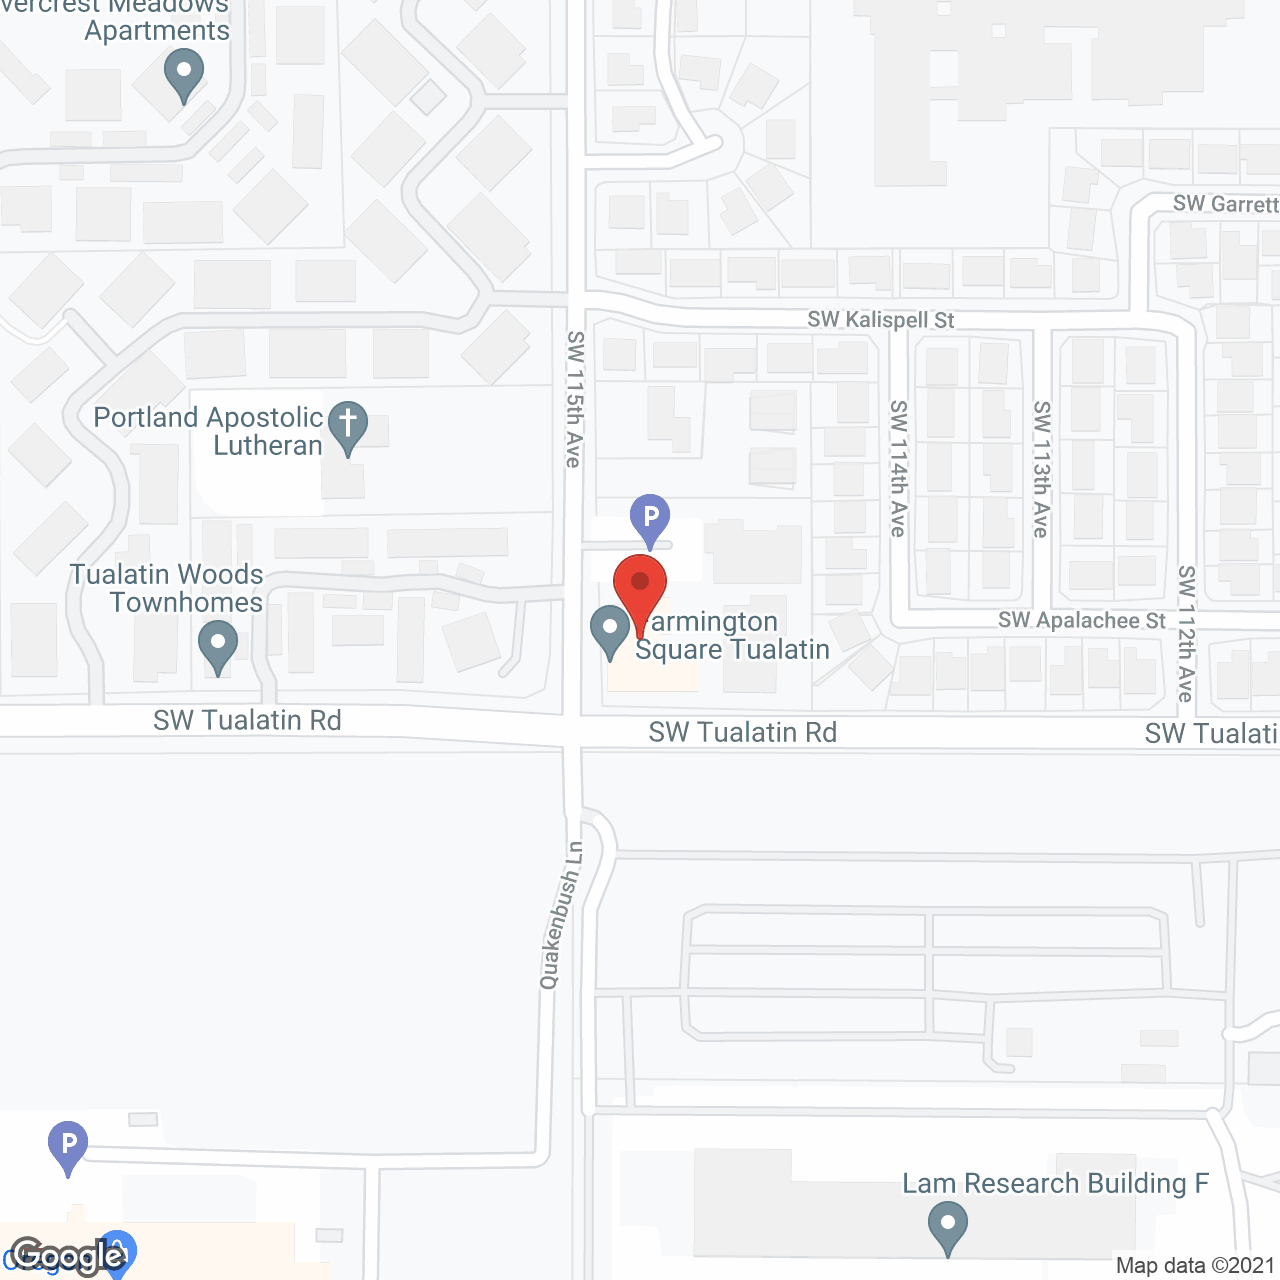 Farmington Square at Tualatin in google map